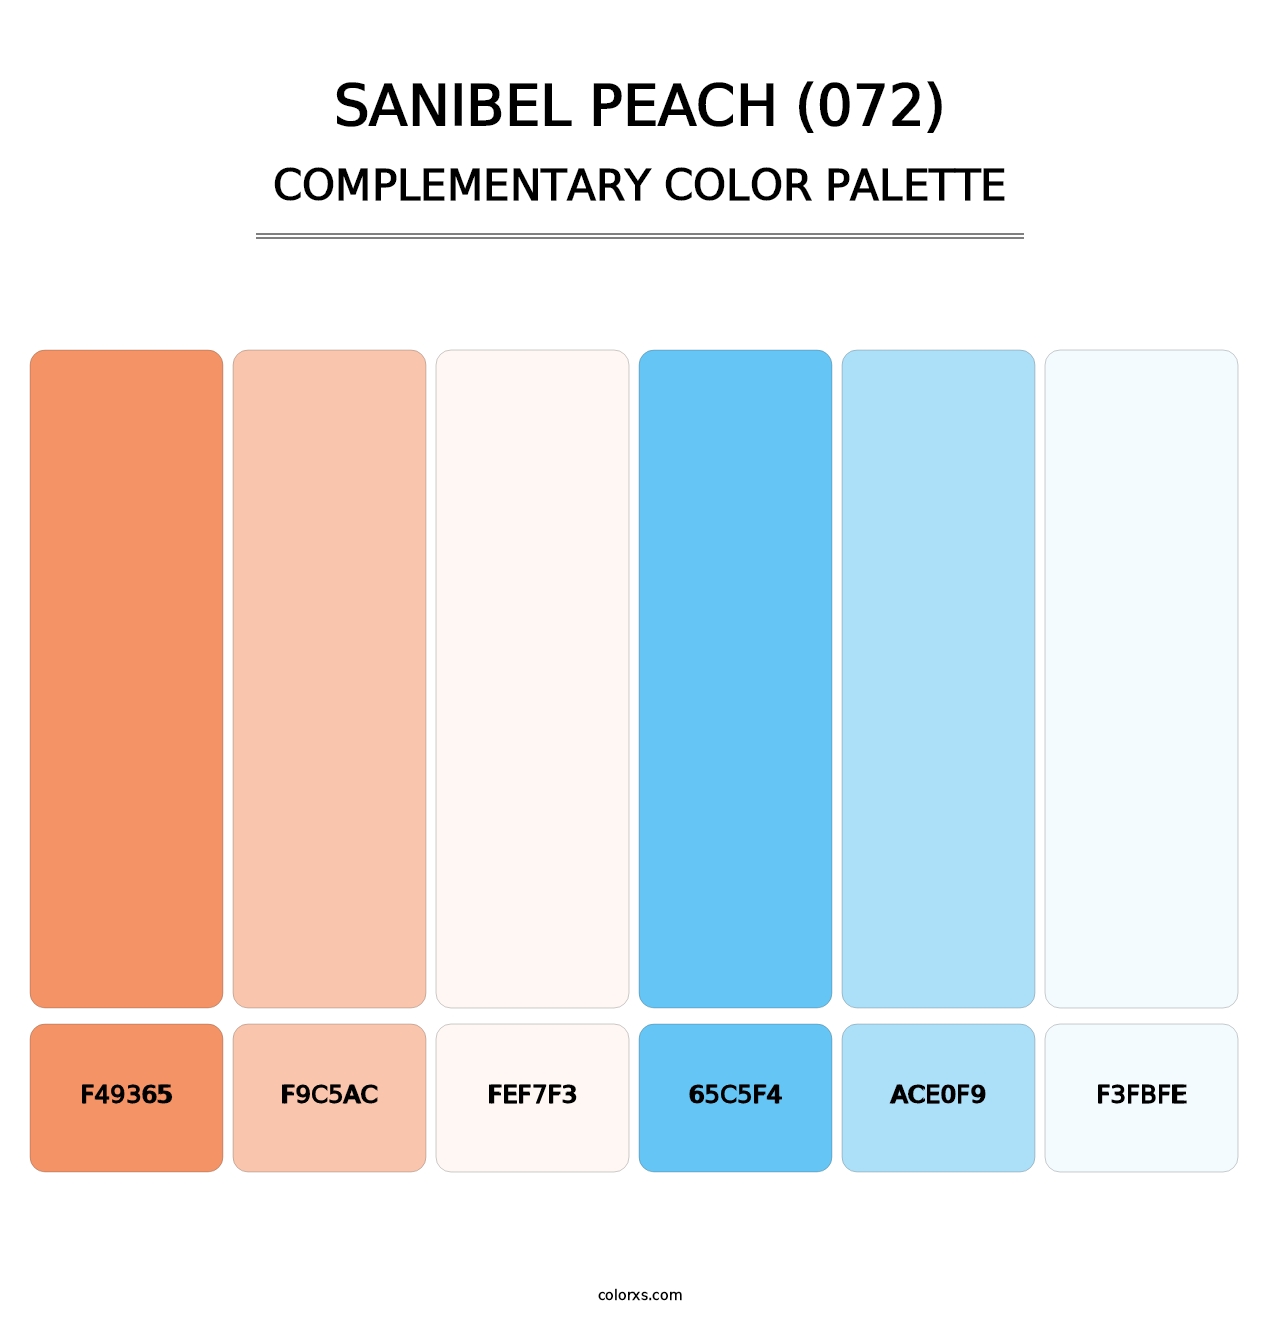 Sanibel Peach (072) - Complementary Color Palette